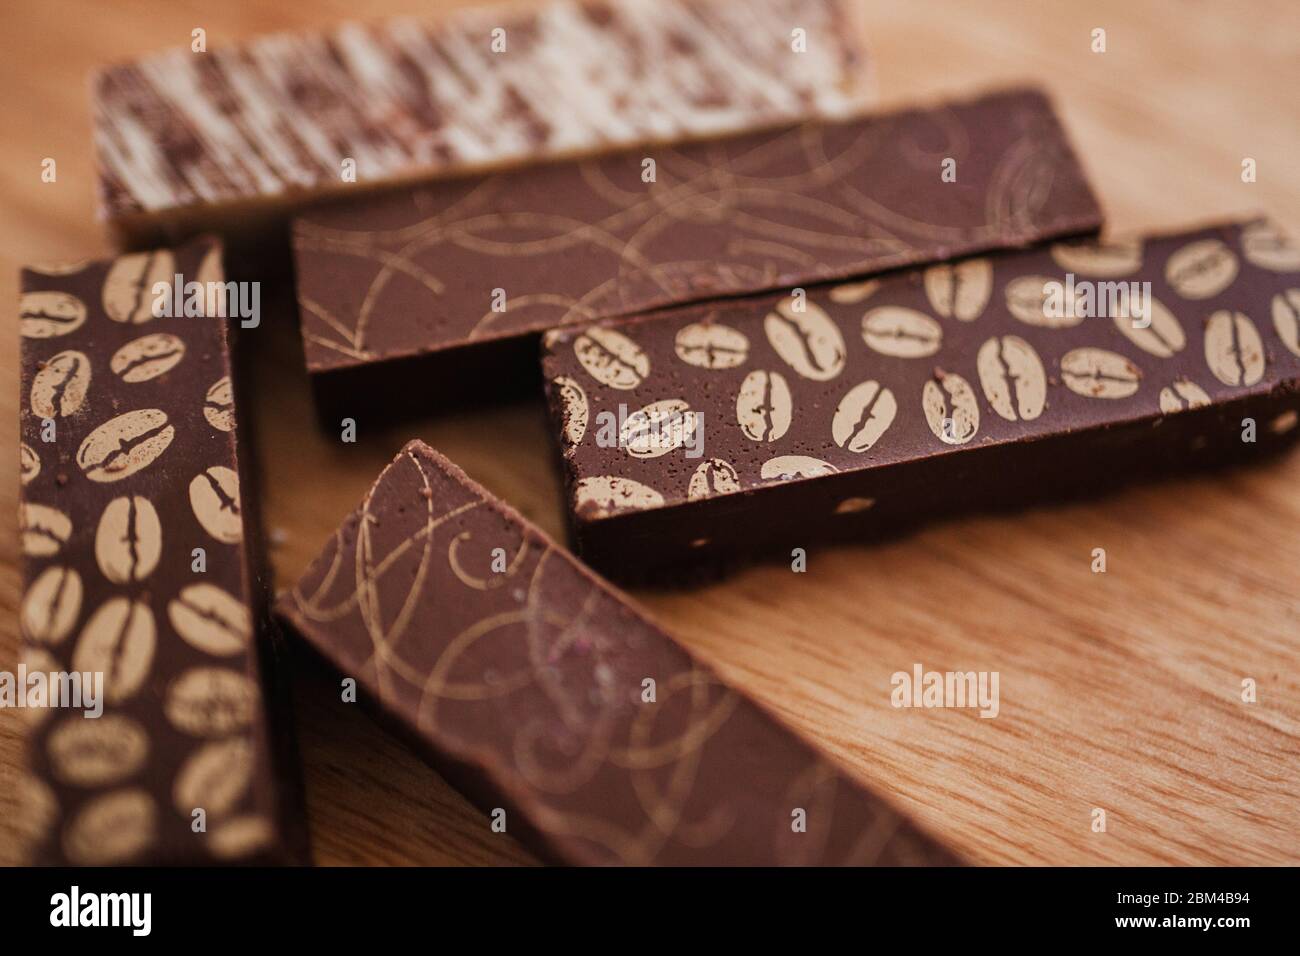 turron chocolate and coffee Stock Photo